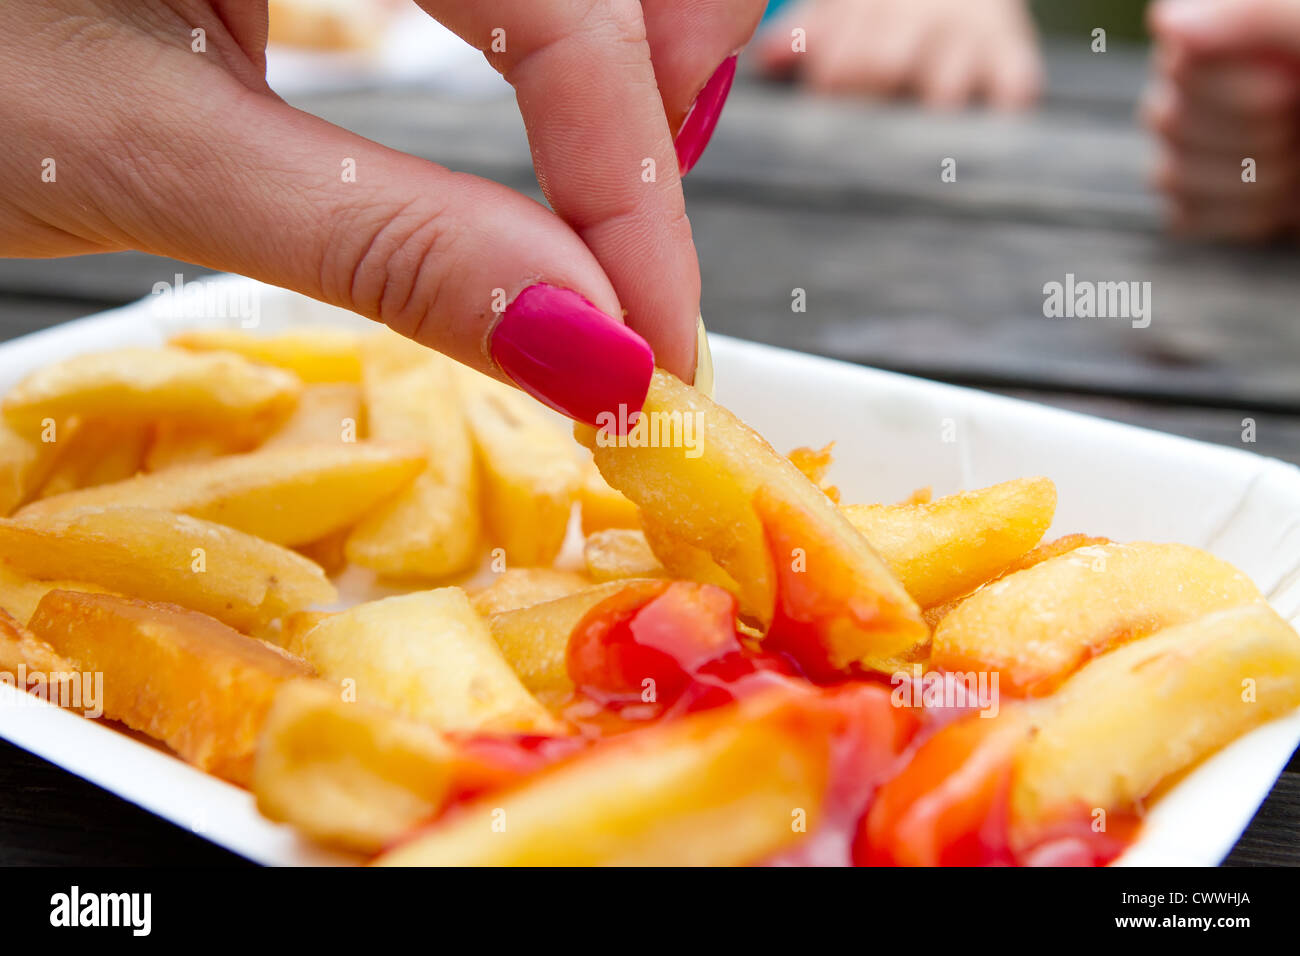 Femme avec des ongles rose eating chips Photo Stock - Alamy